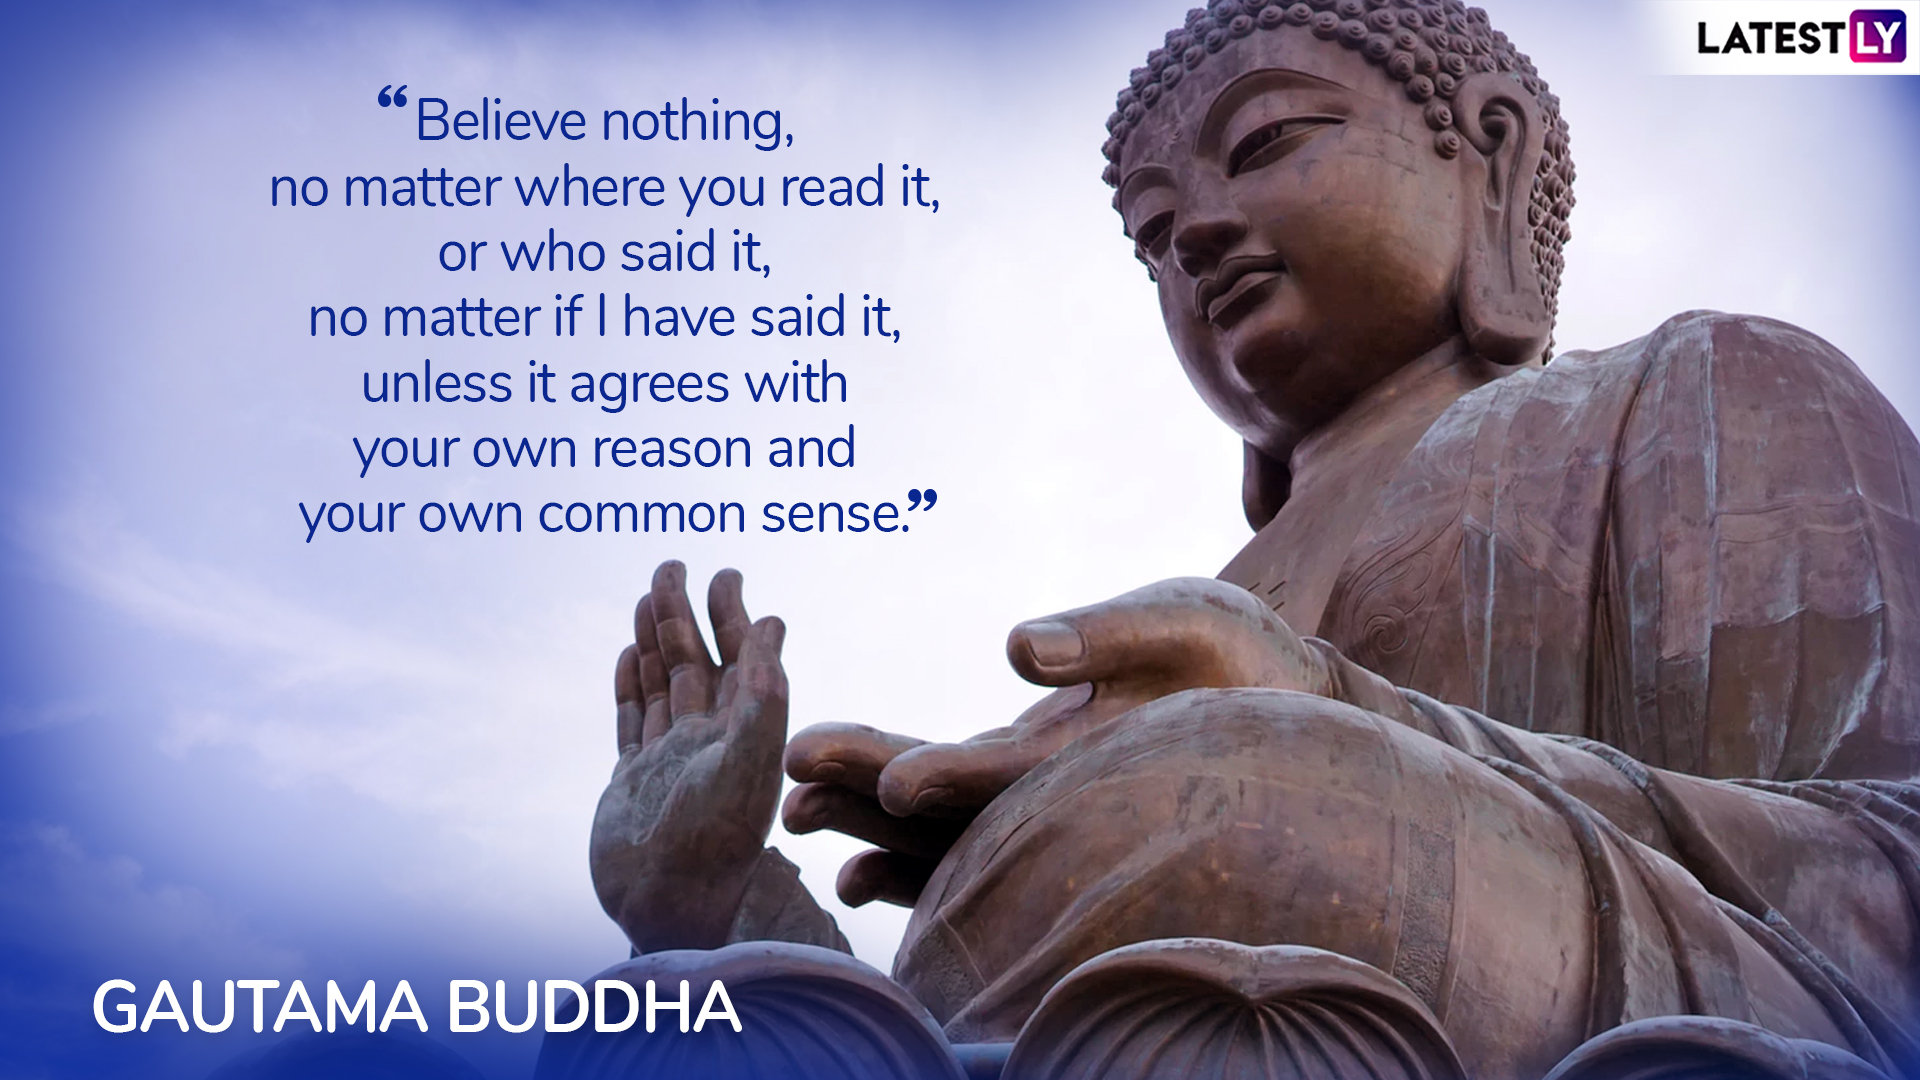 Buddha-Jayanti-Quotes-Images.jpg